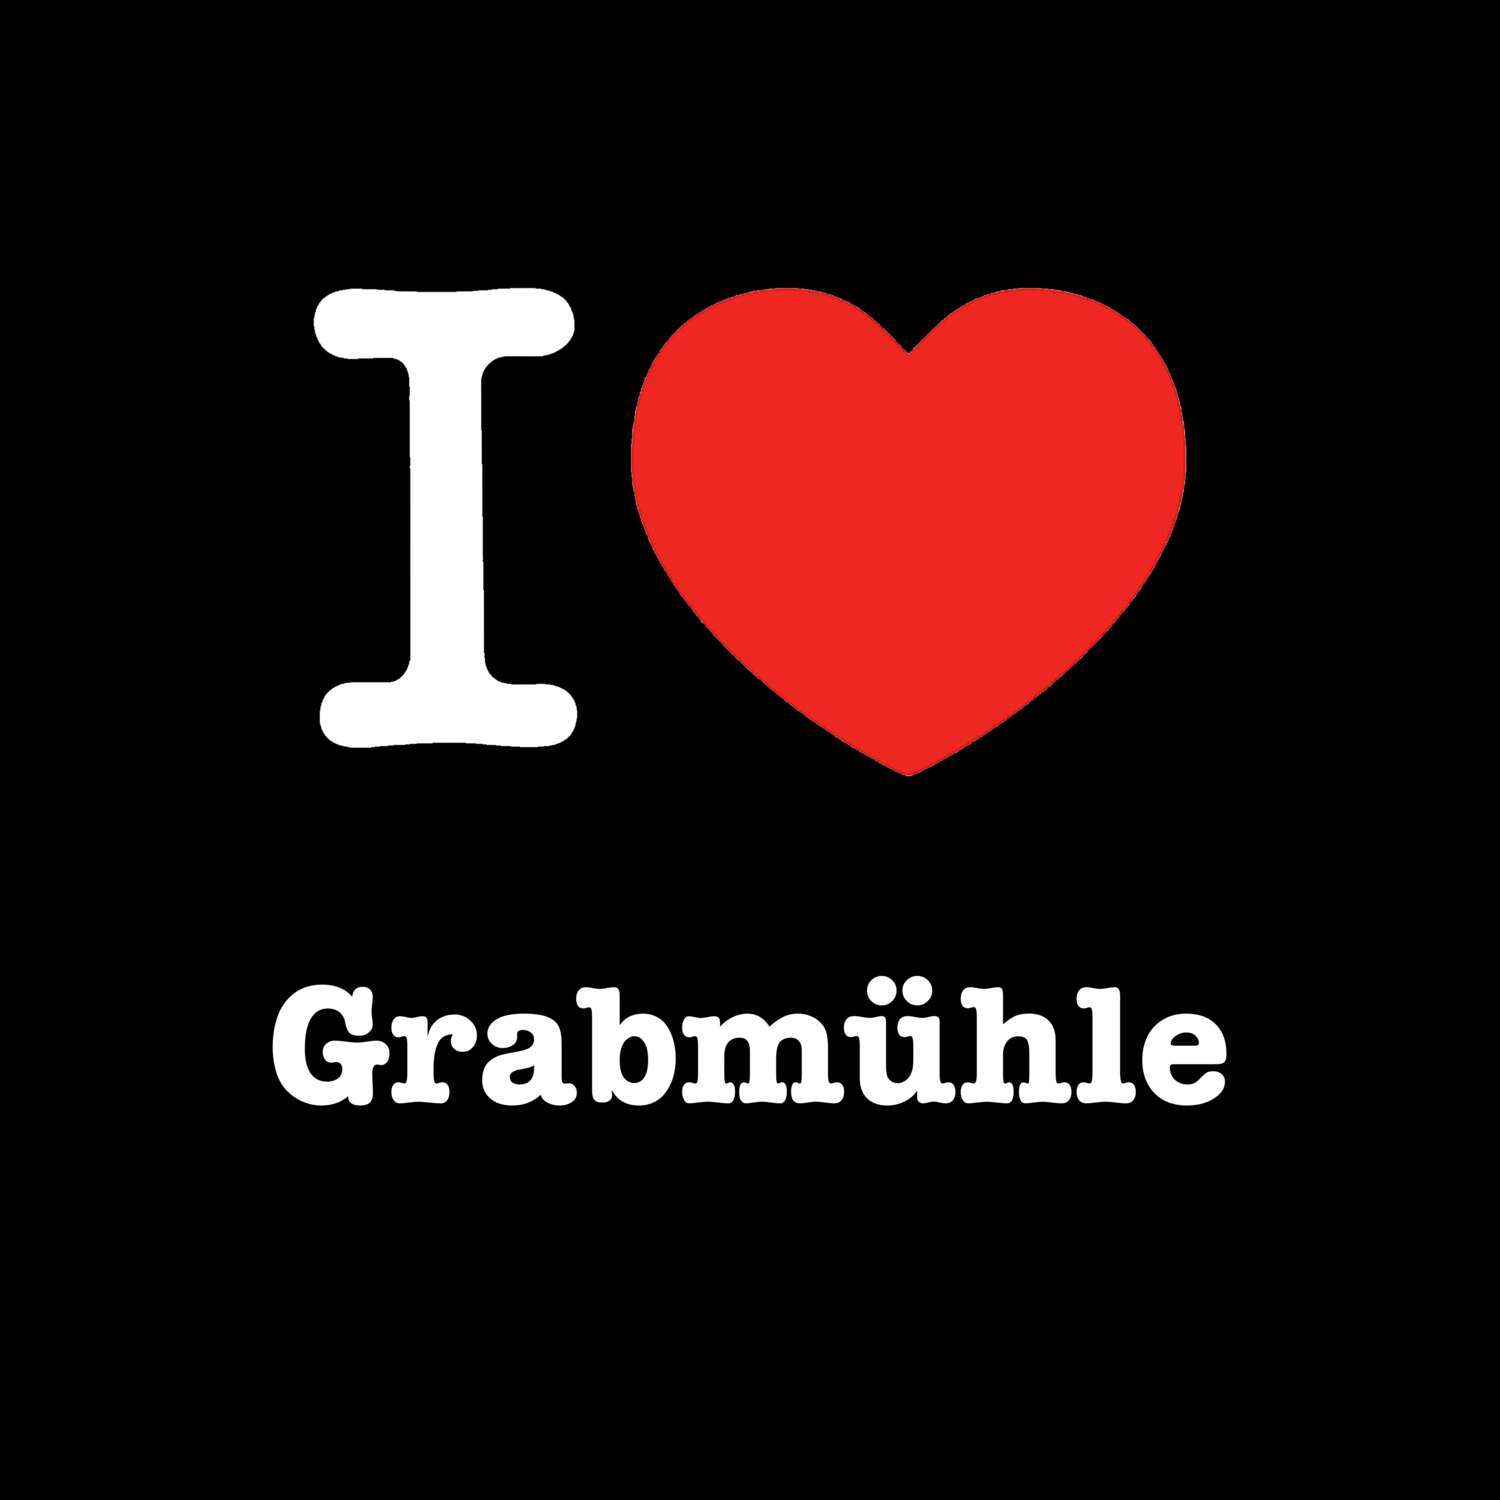 Grabmühle T-Shirt »I love«